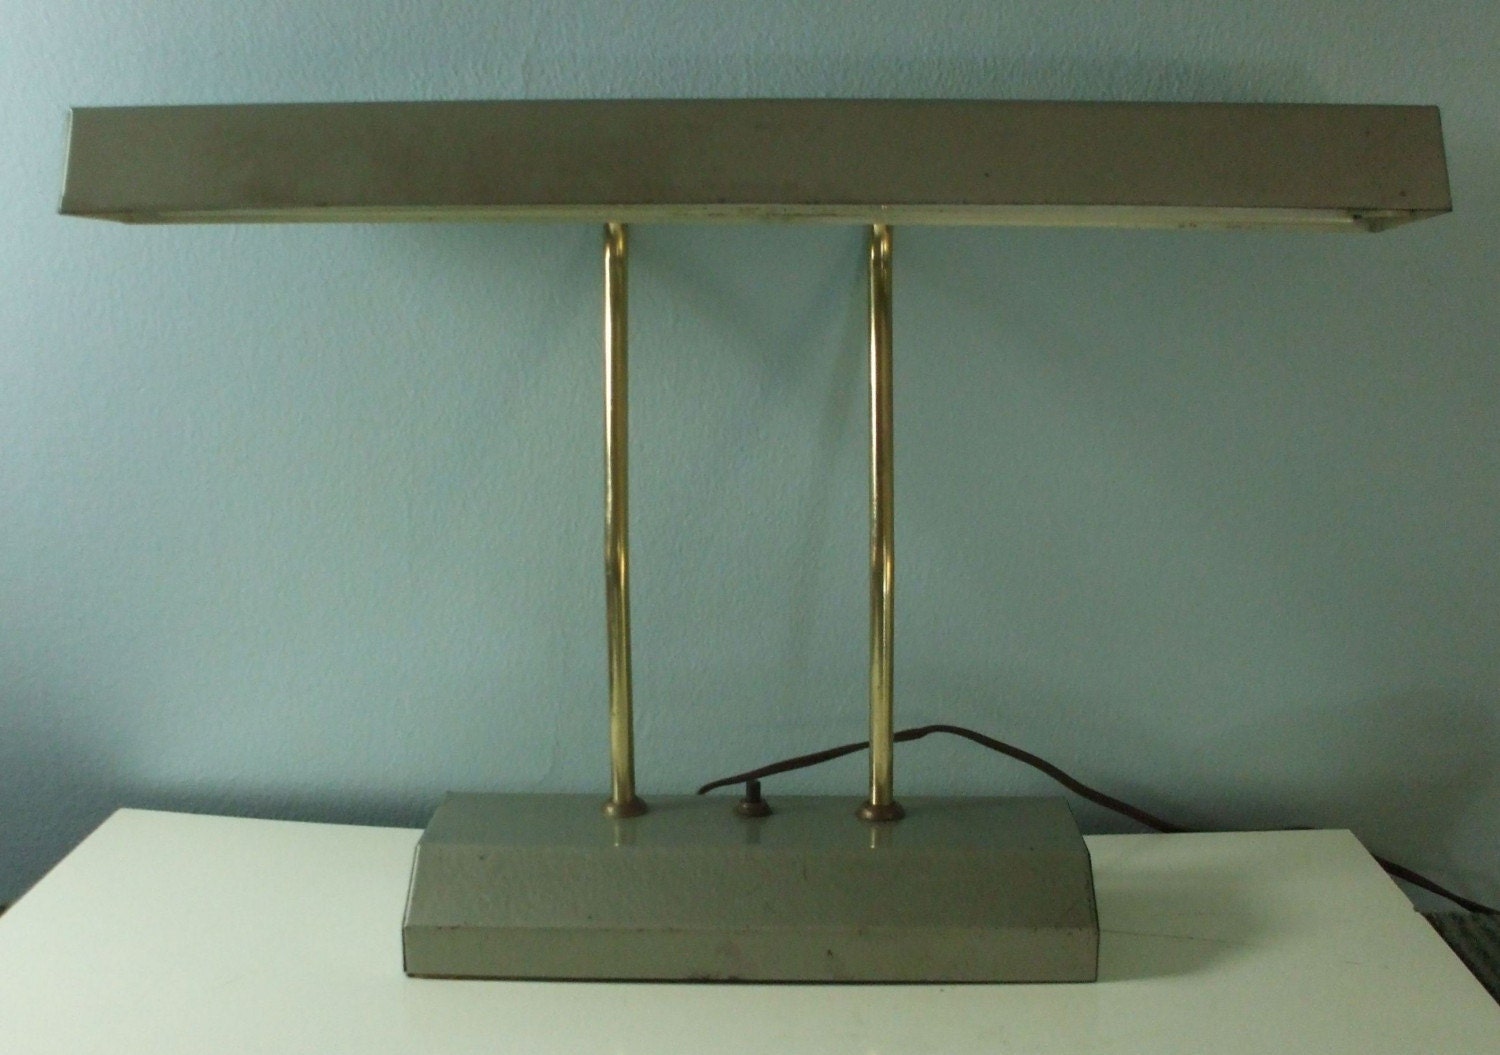 Desk Lamps Fluorescent on Vintage Gray Metal Desk Lamp Fluorescent Bulb By Estatebum On Etsy